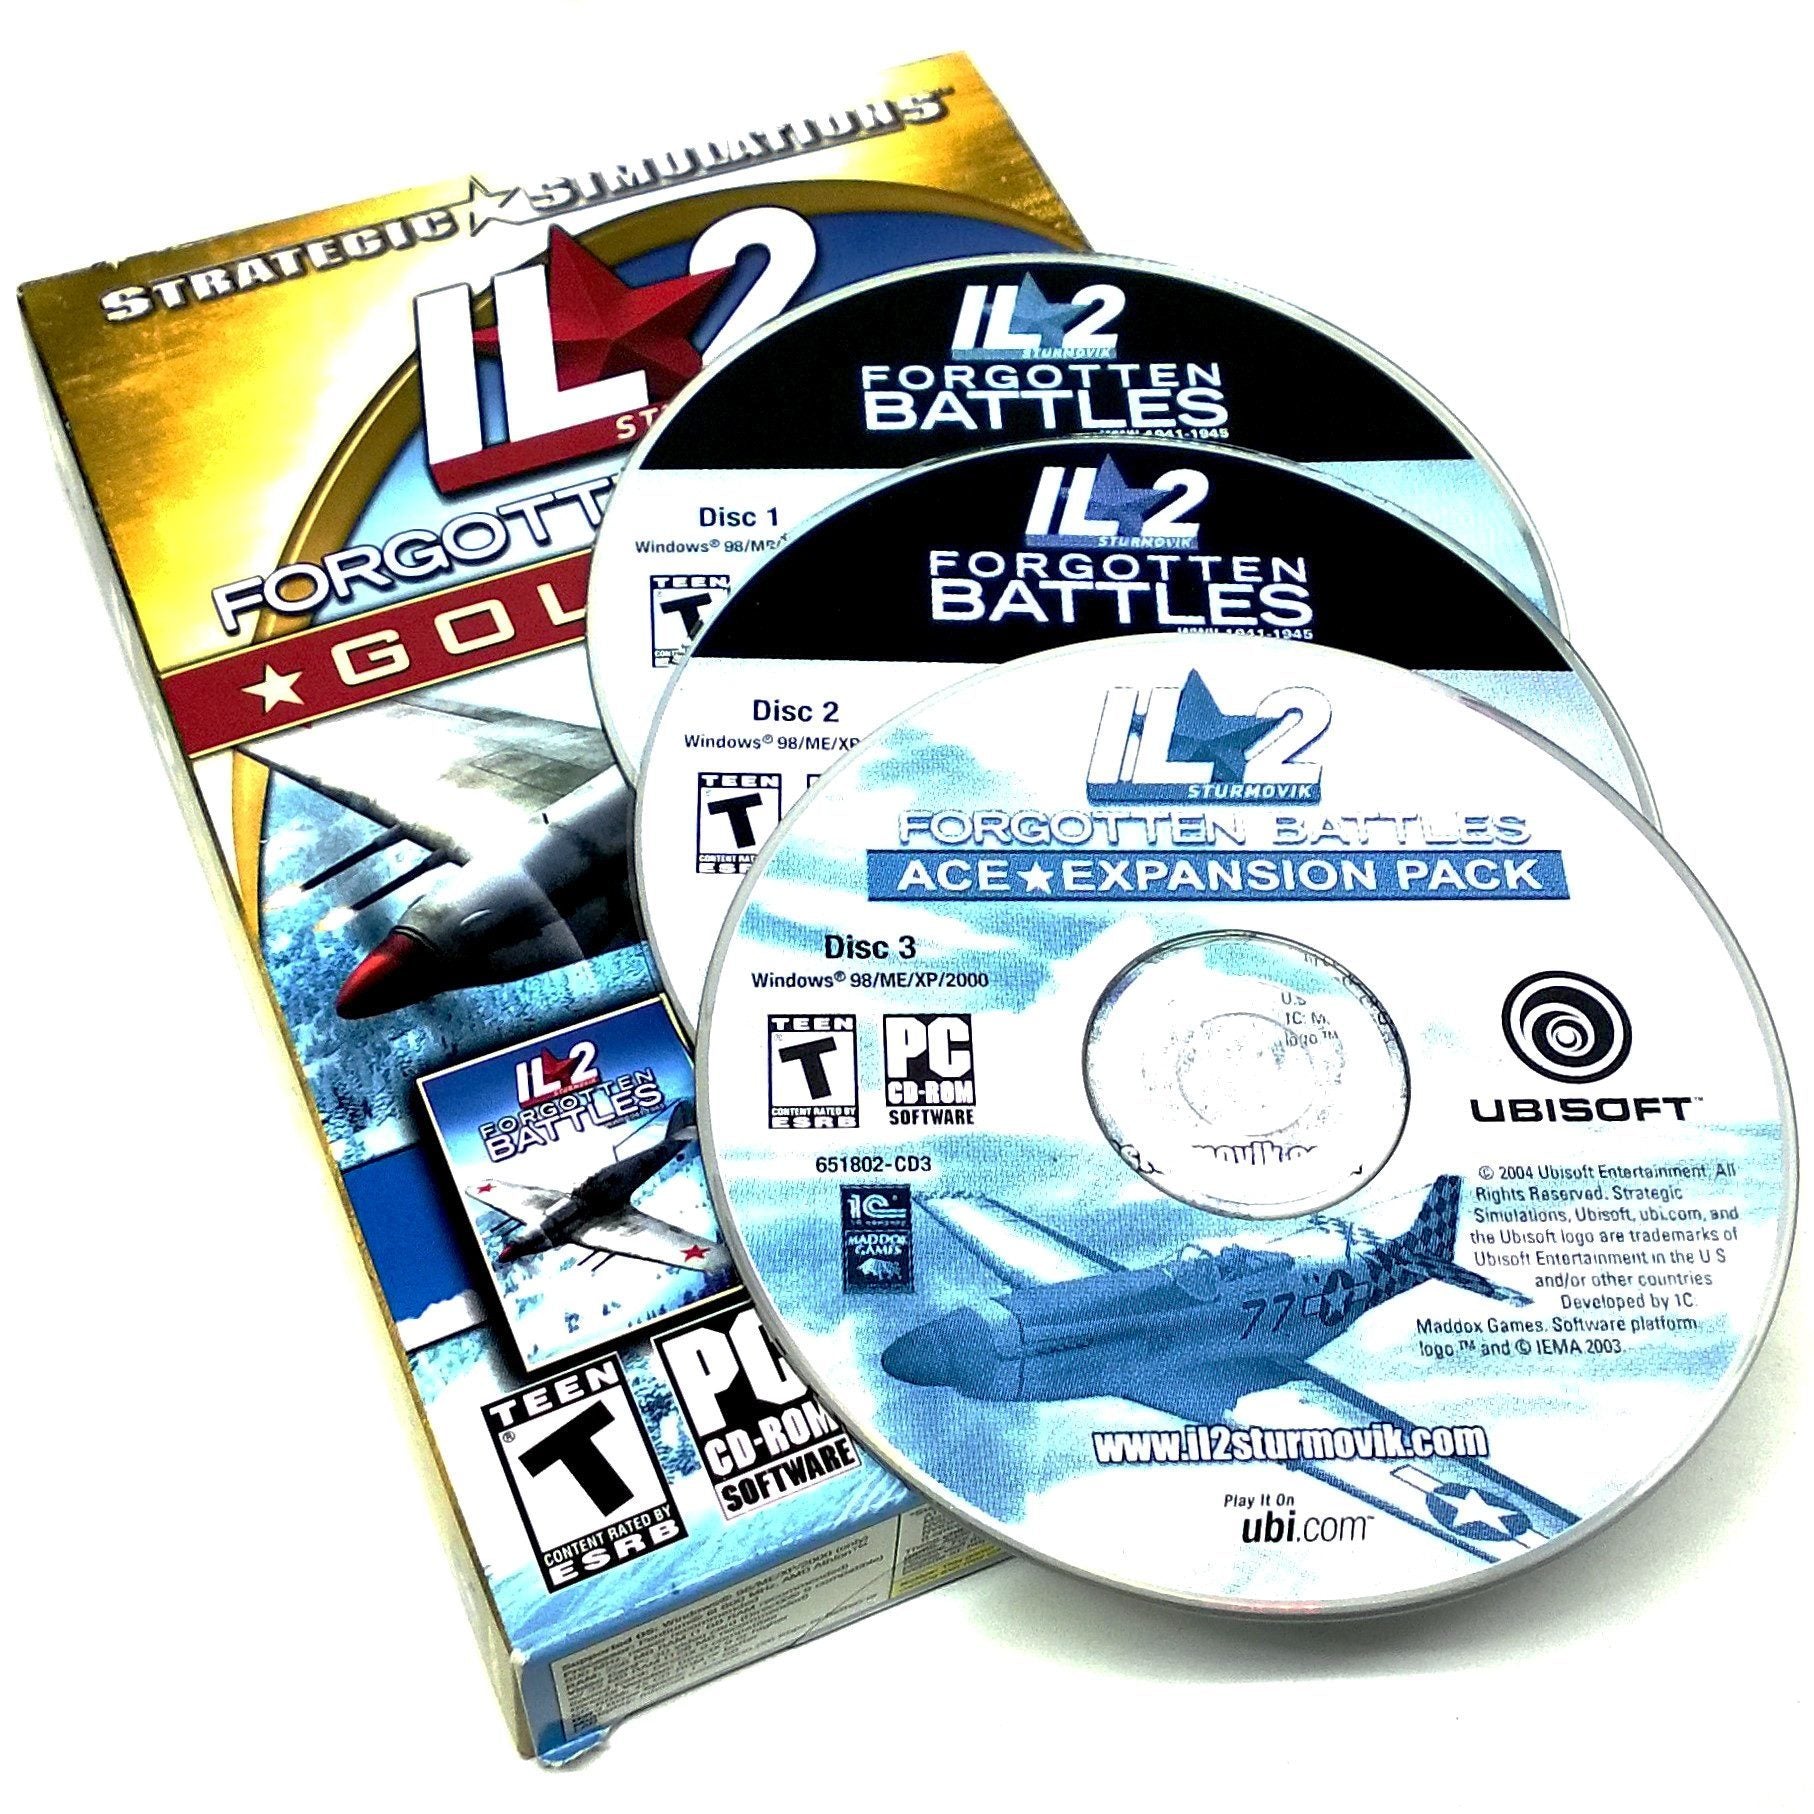 IL-2 Sturmovik: Forgotten Battles (Gold Pack Edition) for PC CD-ROM